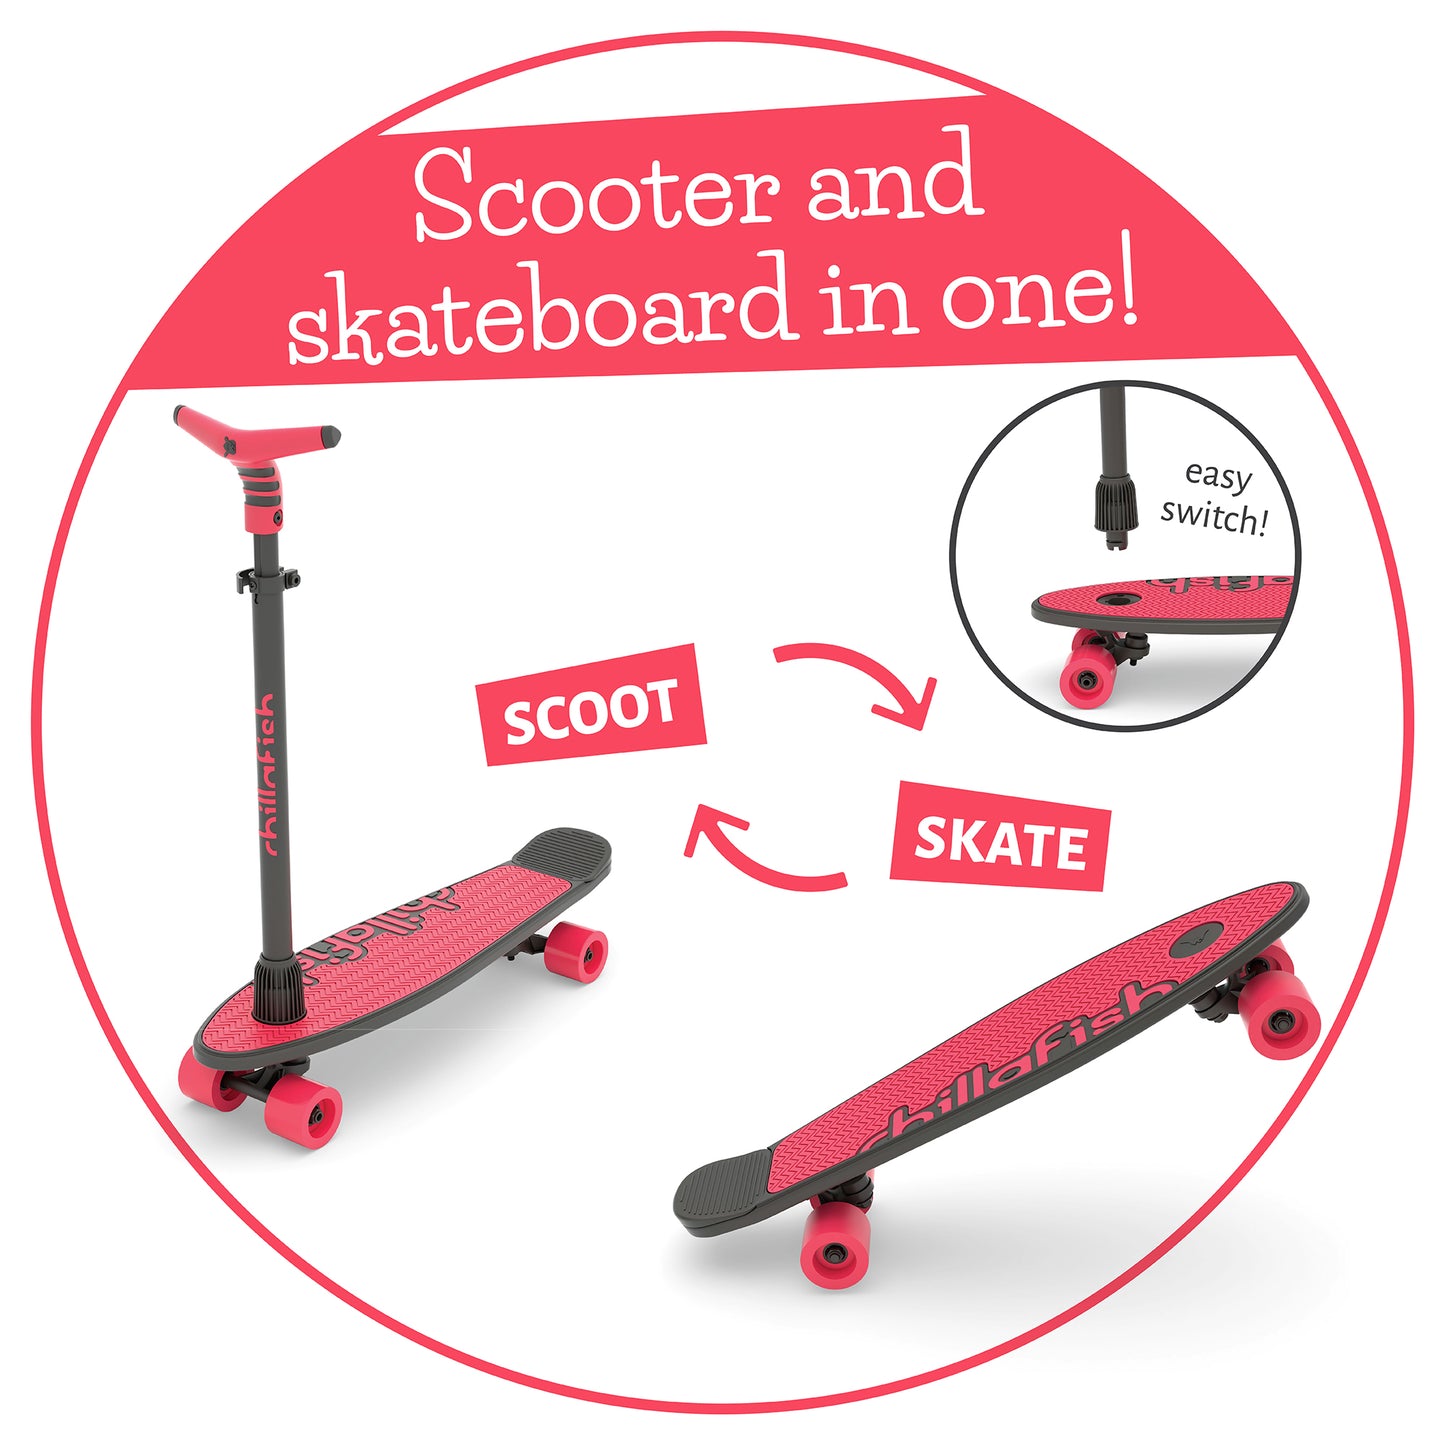 Skatieskootie NEW - skate and scoot in one